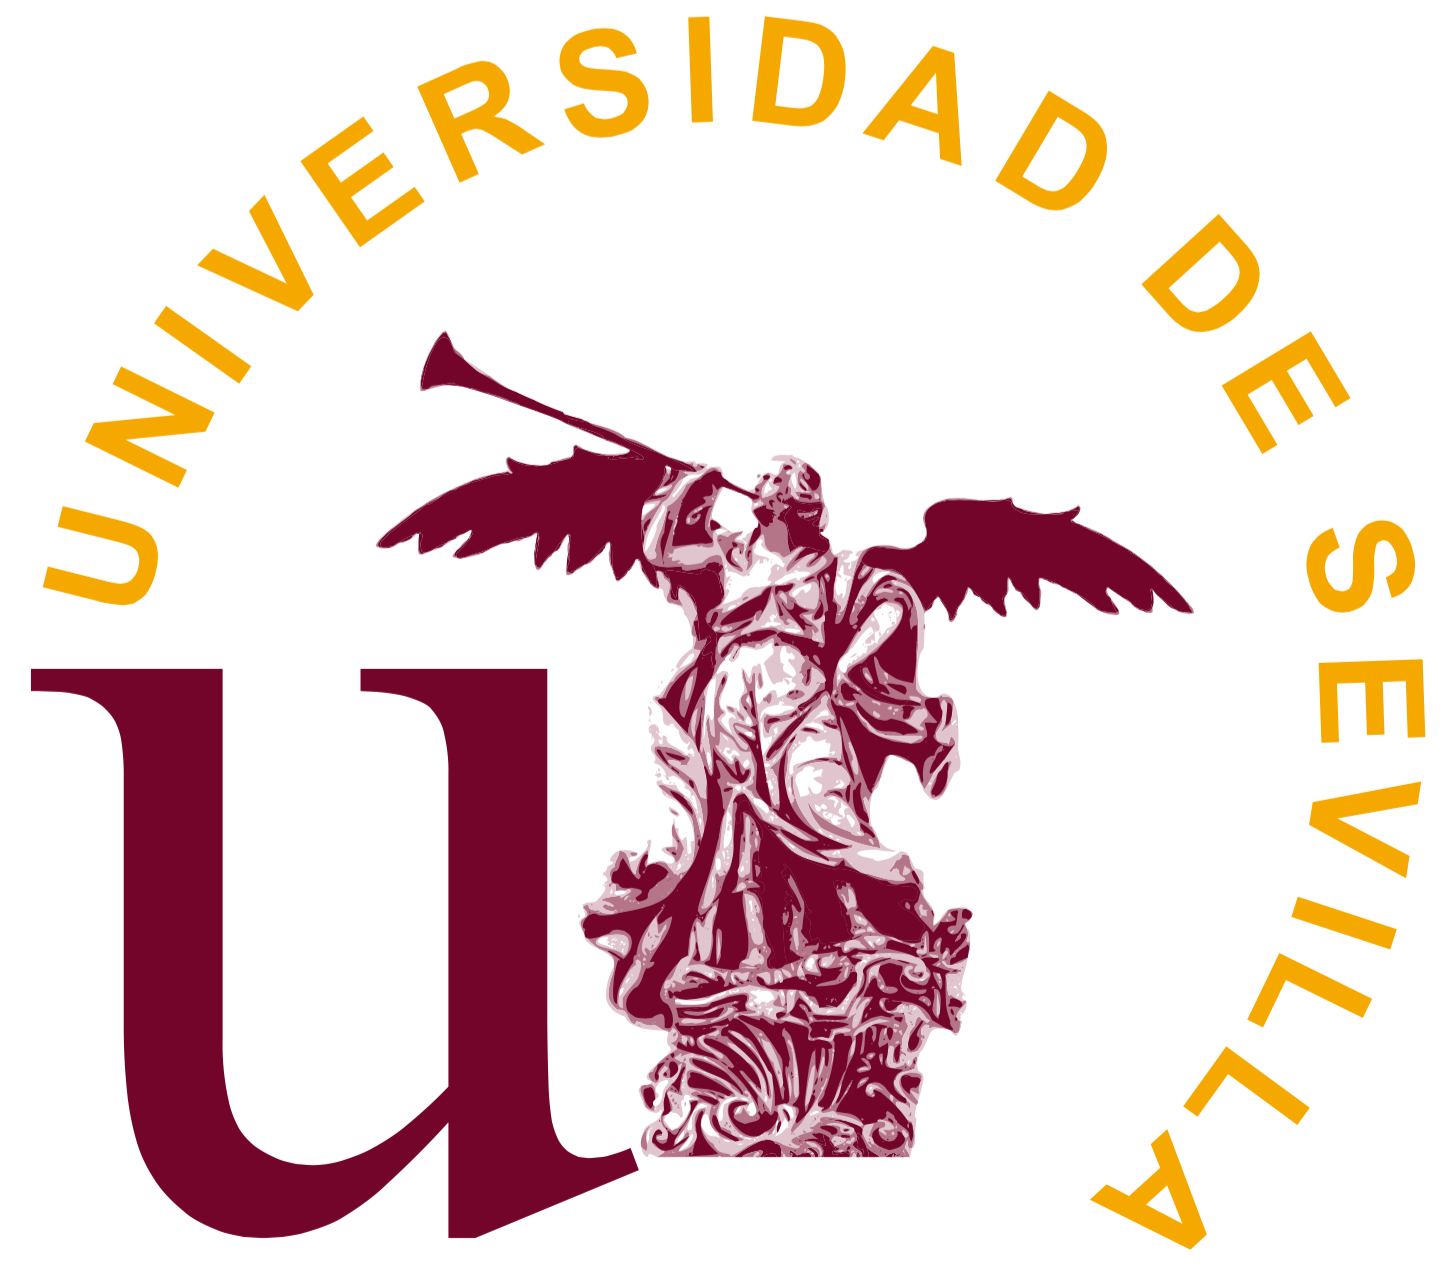 University of Seville Academic Influence